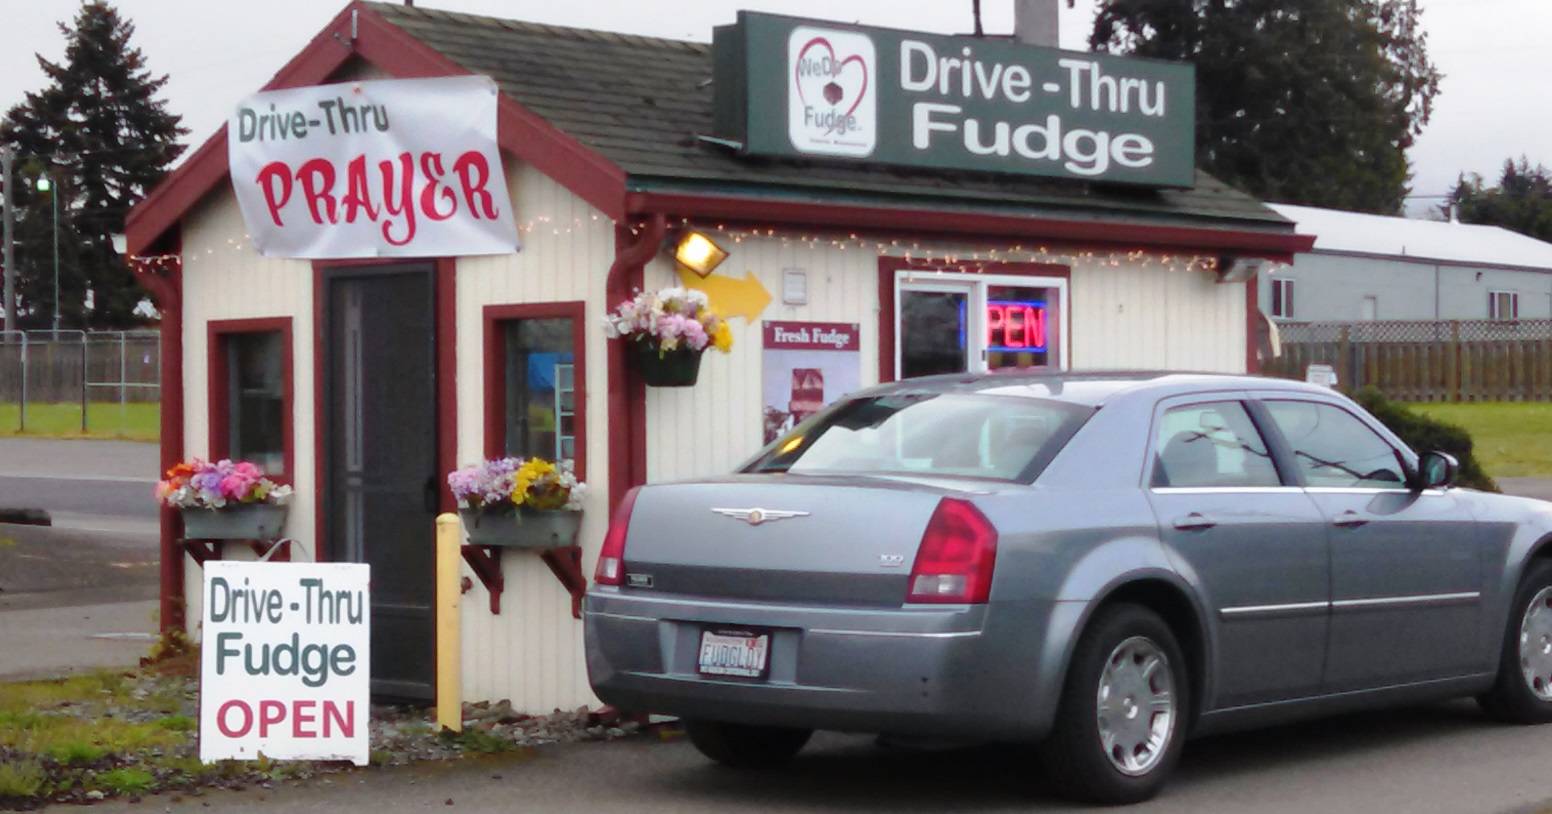 WeDo Fudge to reopen drive-thru